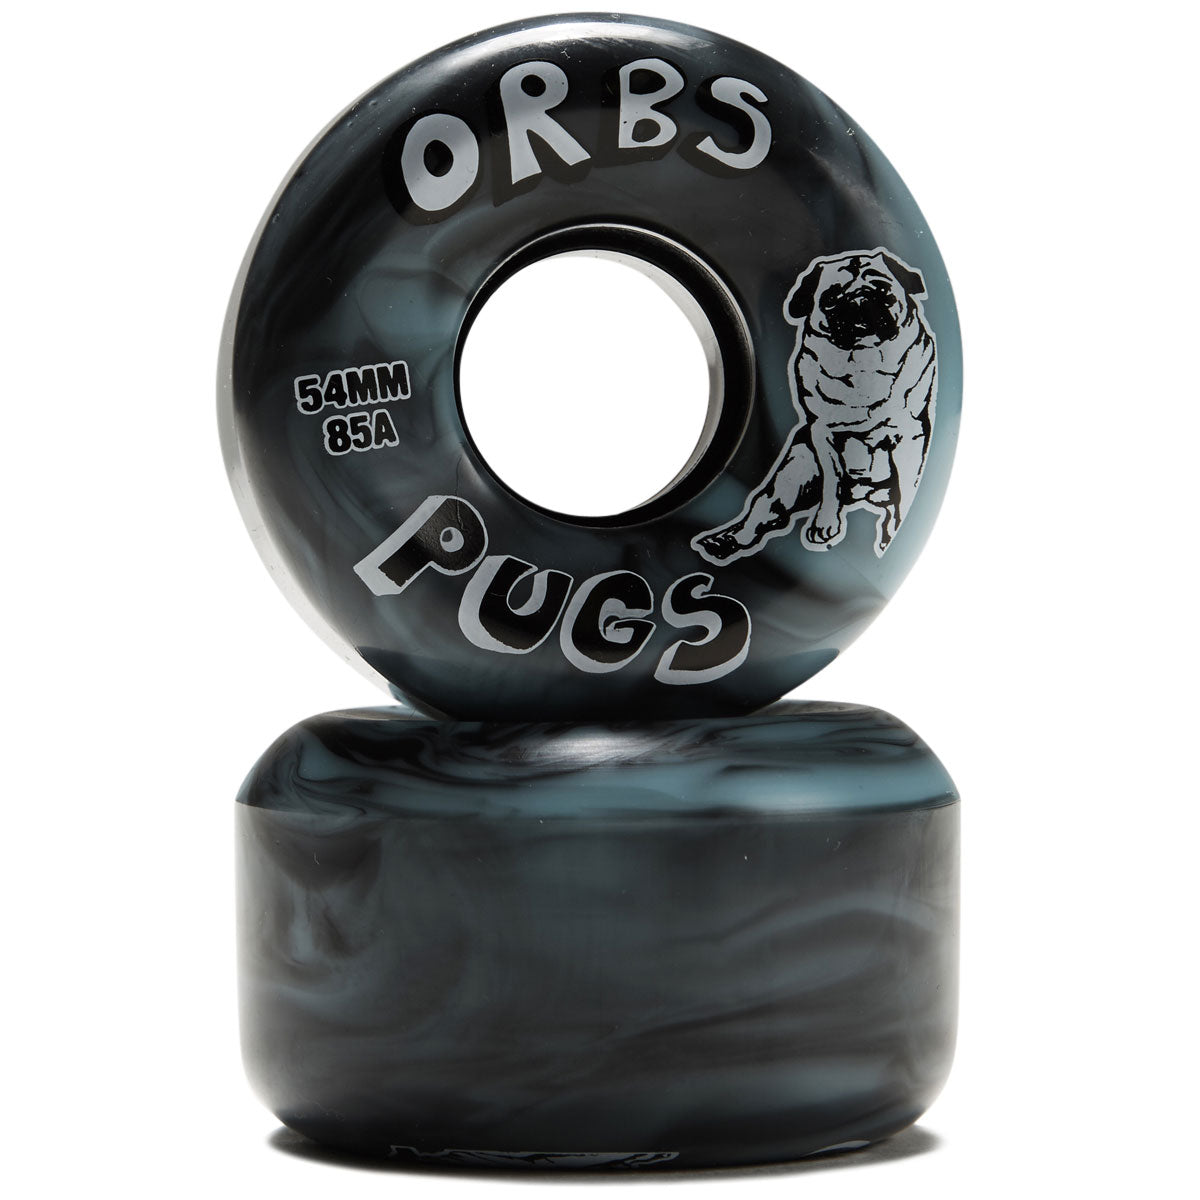 Welcome Orbs Pugs Conical 85A Skateboard Wheels - Black/Blue Swirl - 54mm image 2